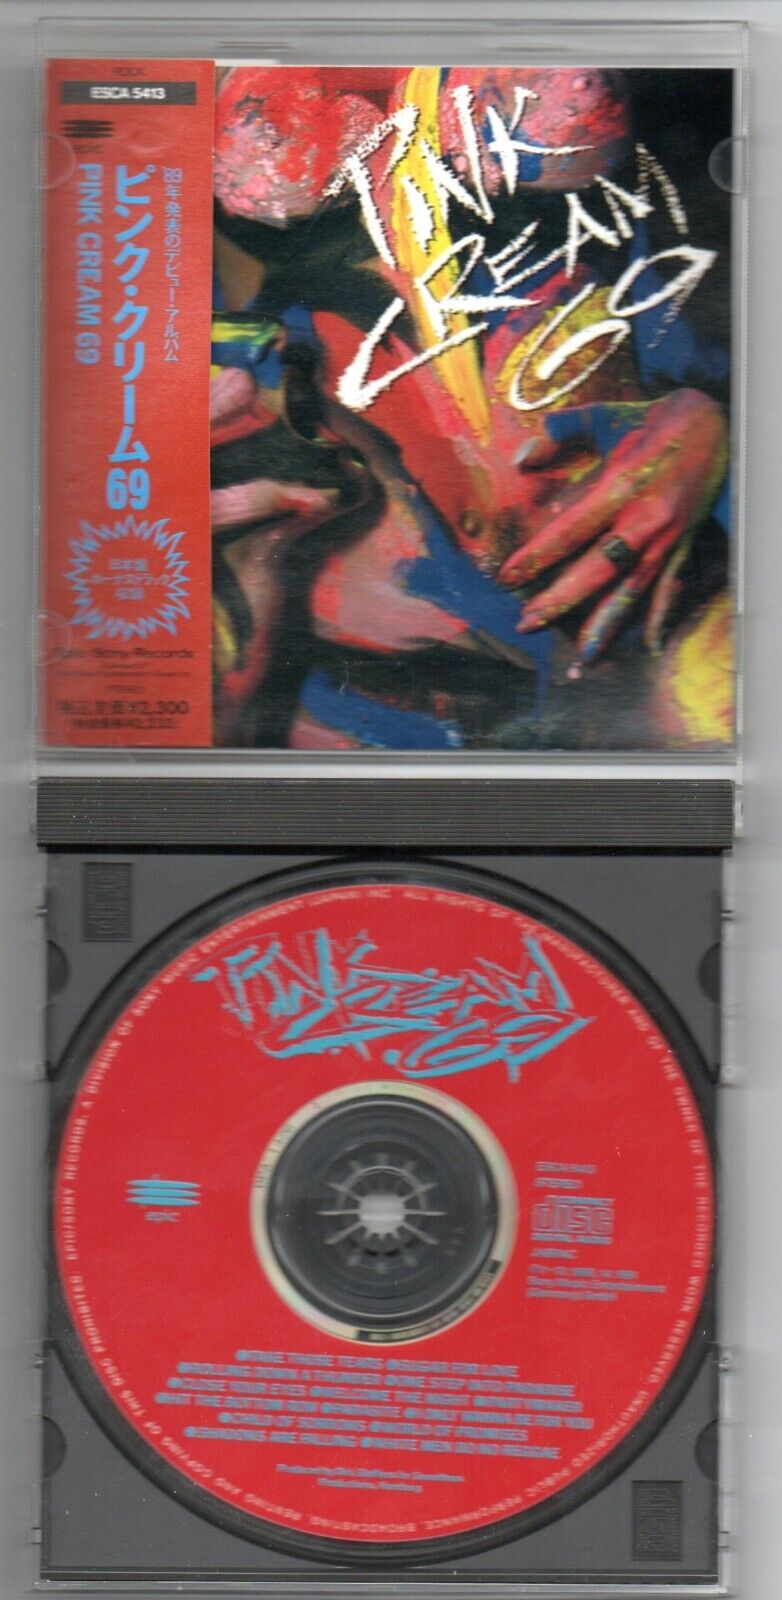 PINK CREAM 69: PINK CREAM 69 CD JAPANESE IMPORT HARD ROCK ANDI DERIS DENNIS WARD